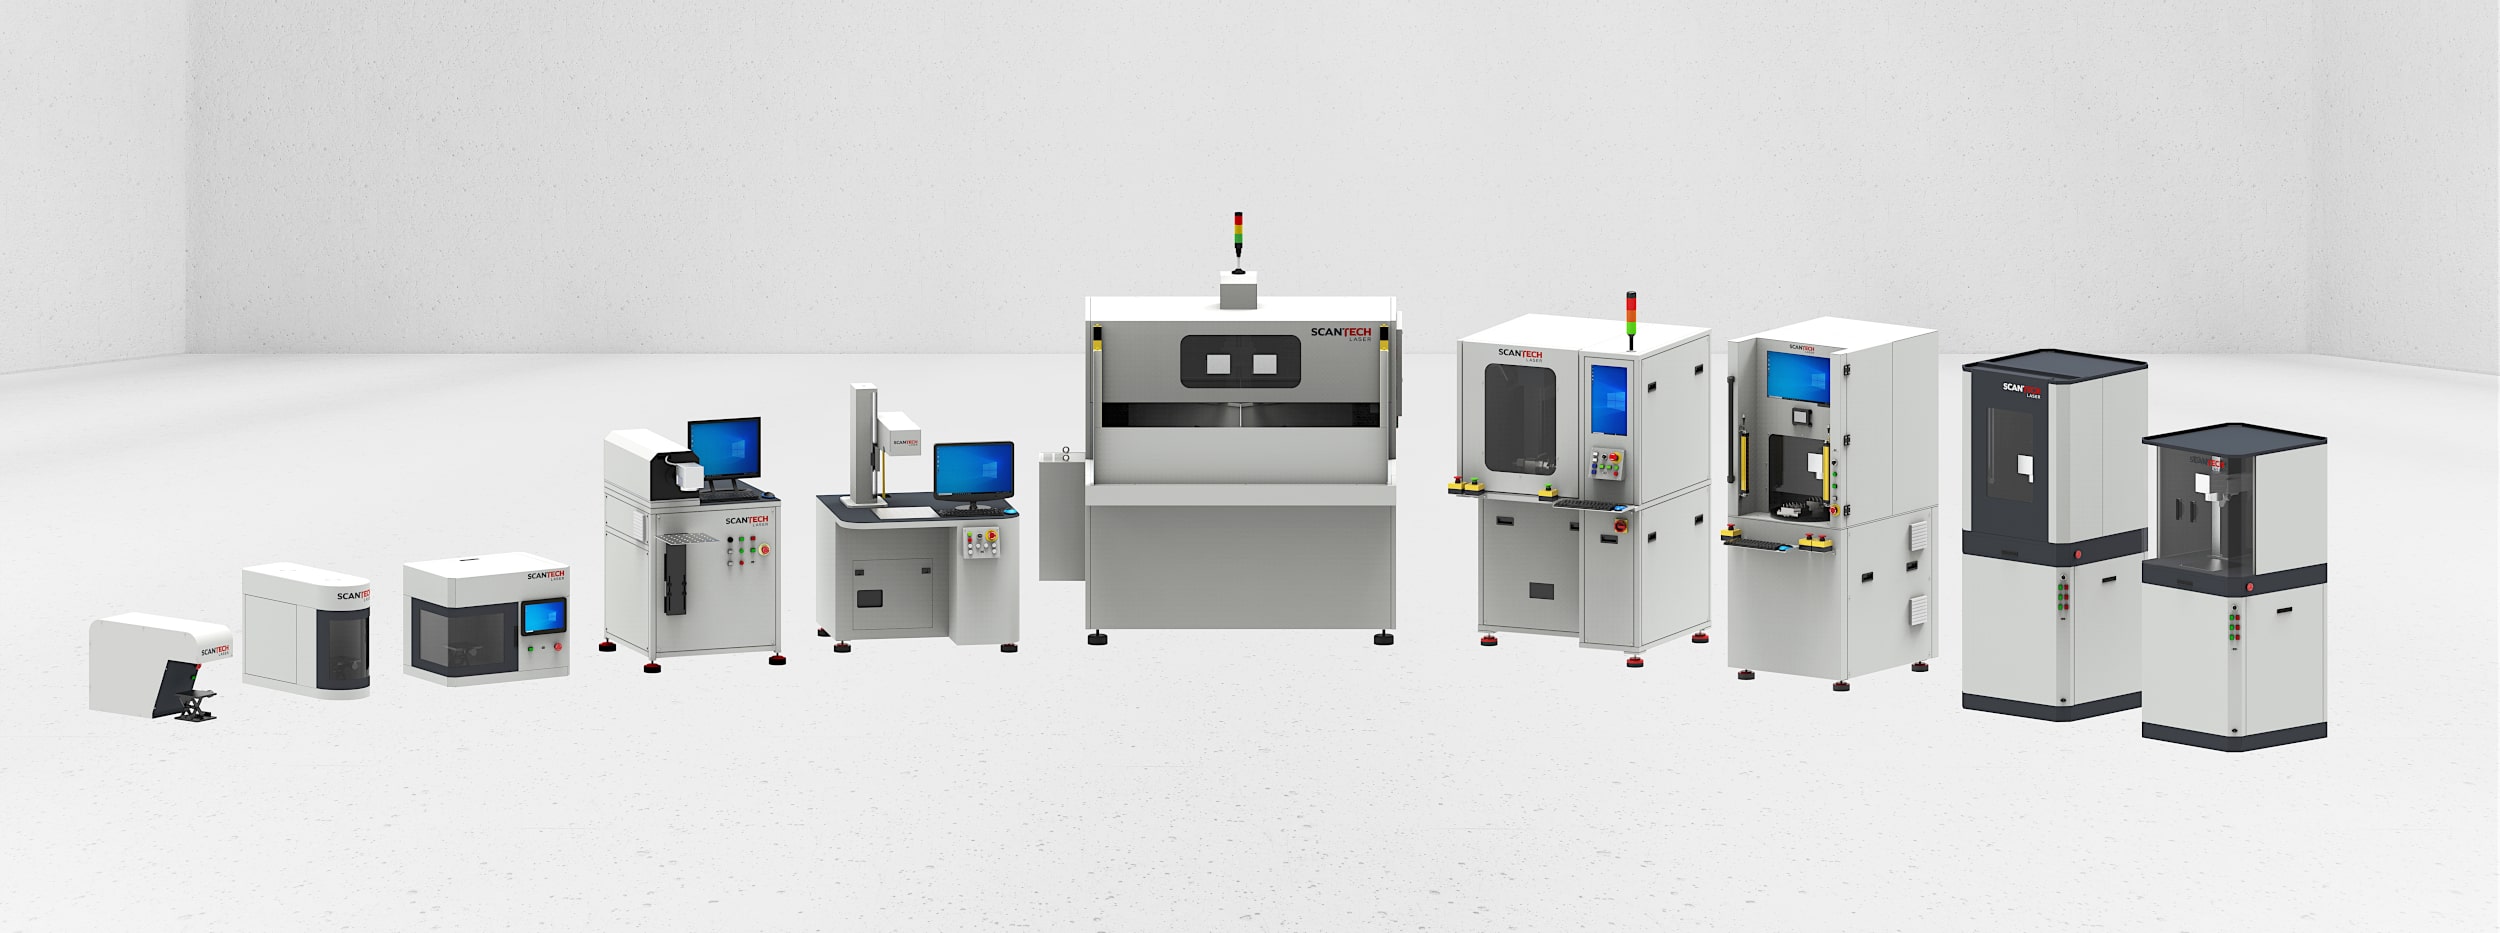 Laser Marking Machine, Green Laser Marking - 3D Crystal/Glass Engaving